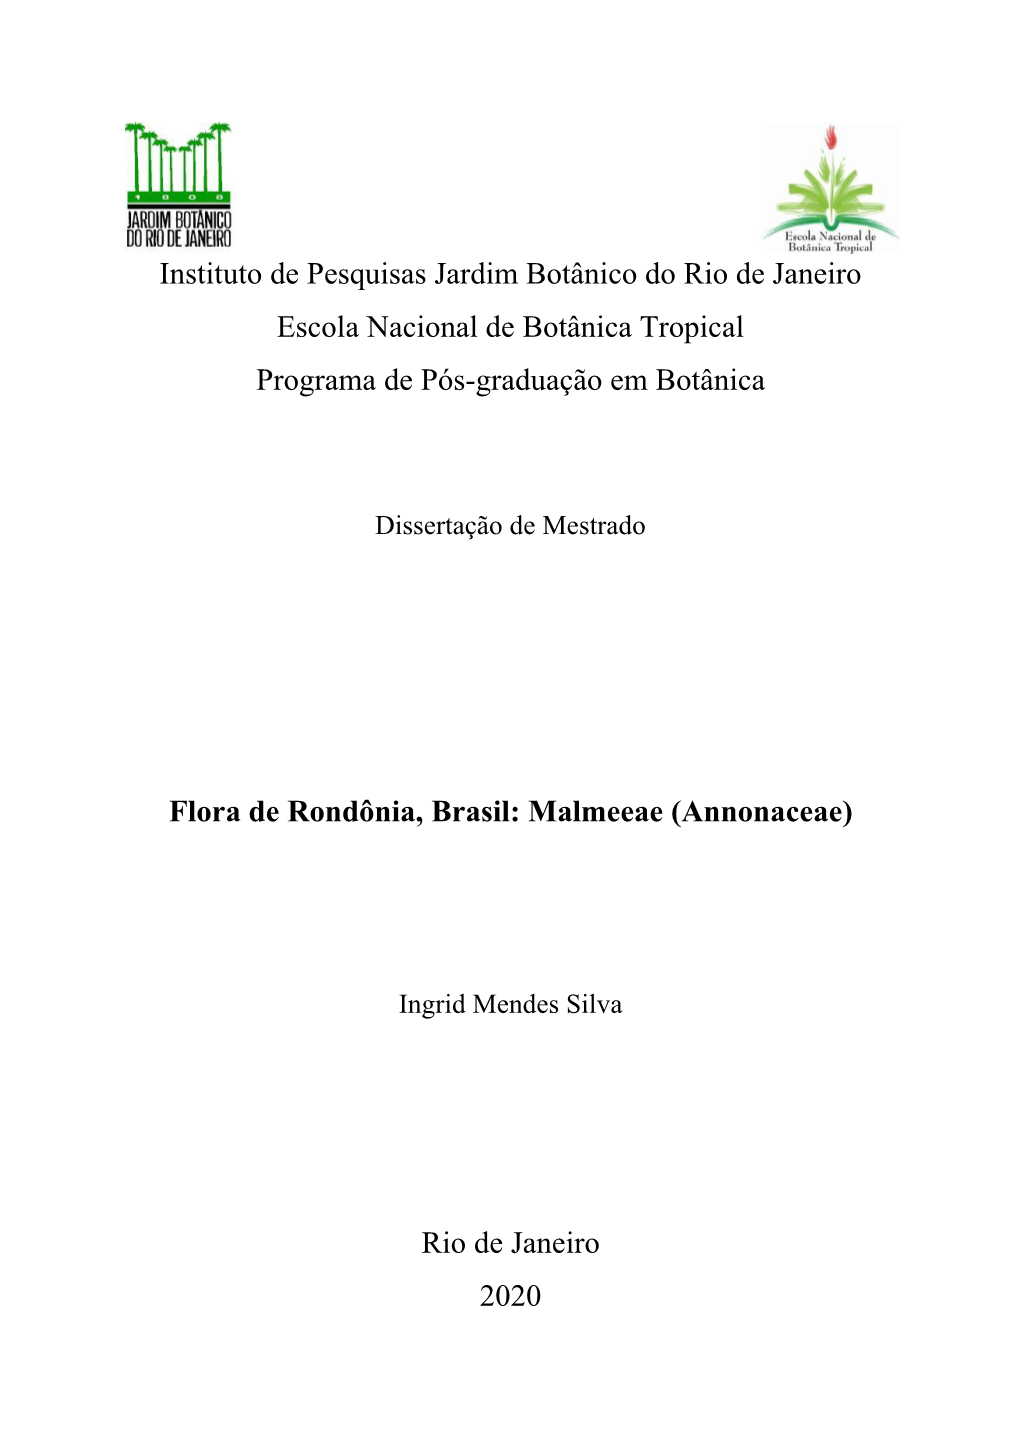 Flora De Rondônia, Brasil: Malmeeae (Annonaceae)